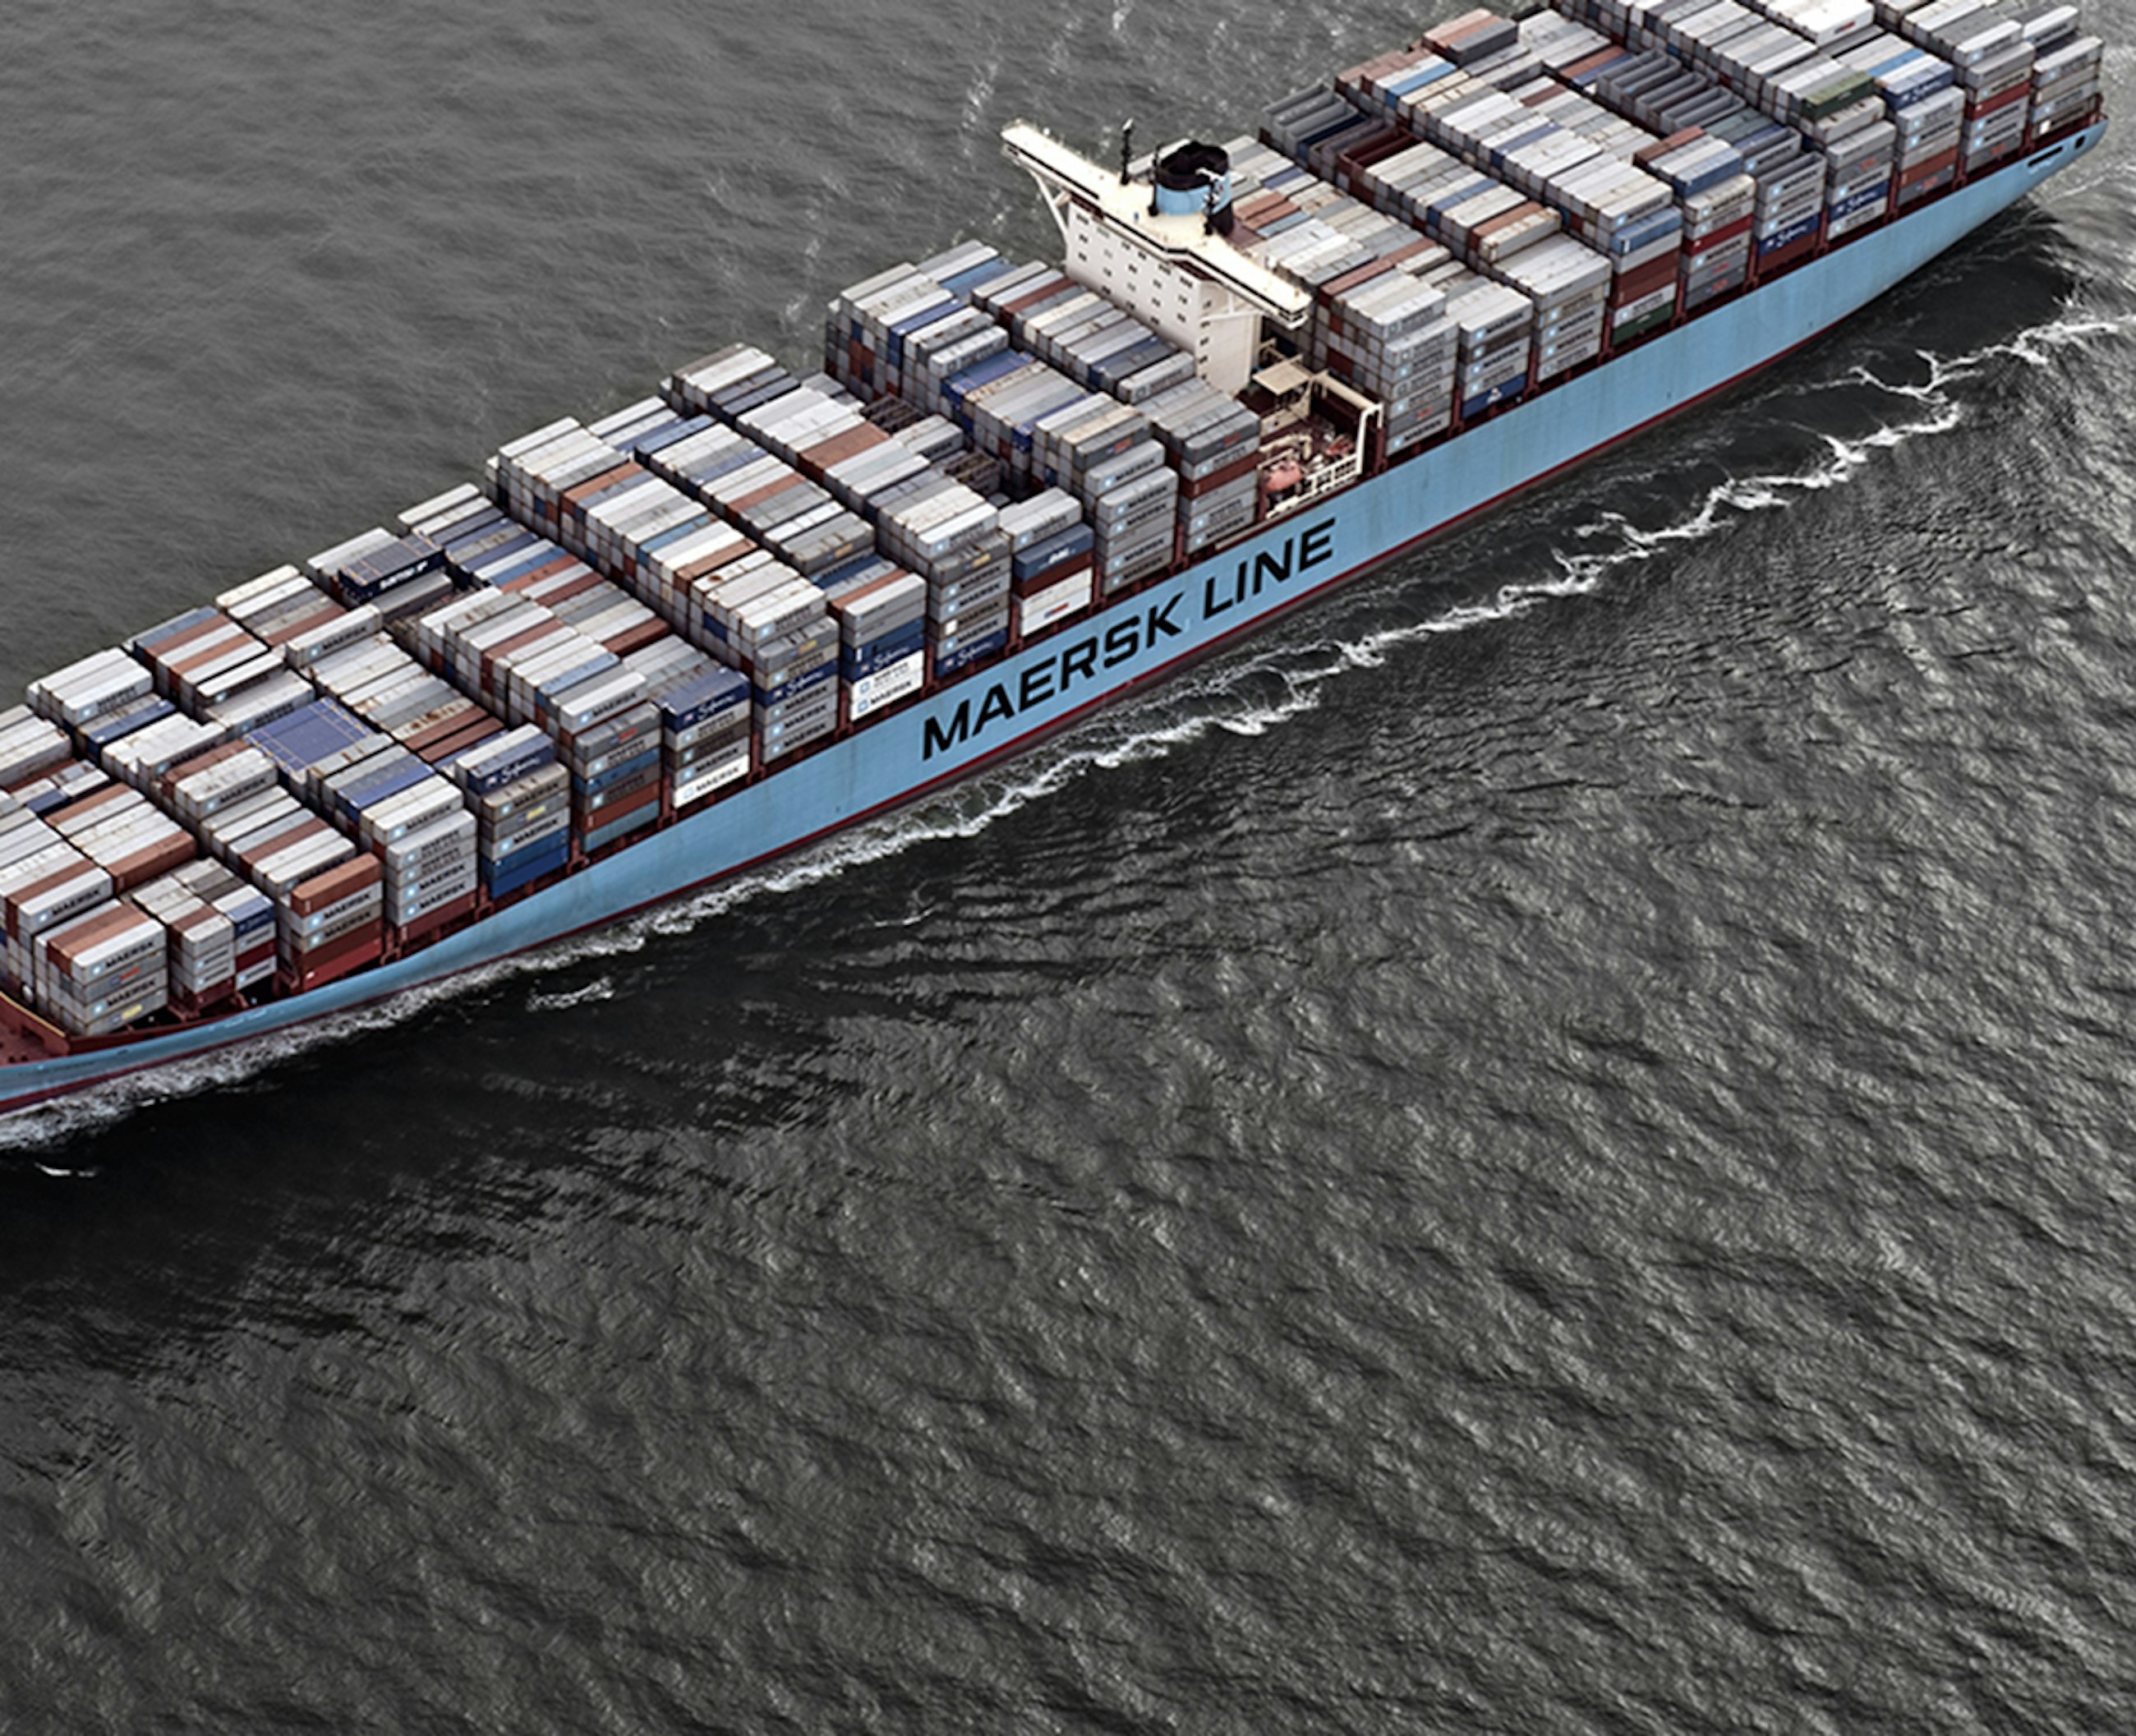 Maersk line future operations